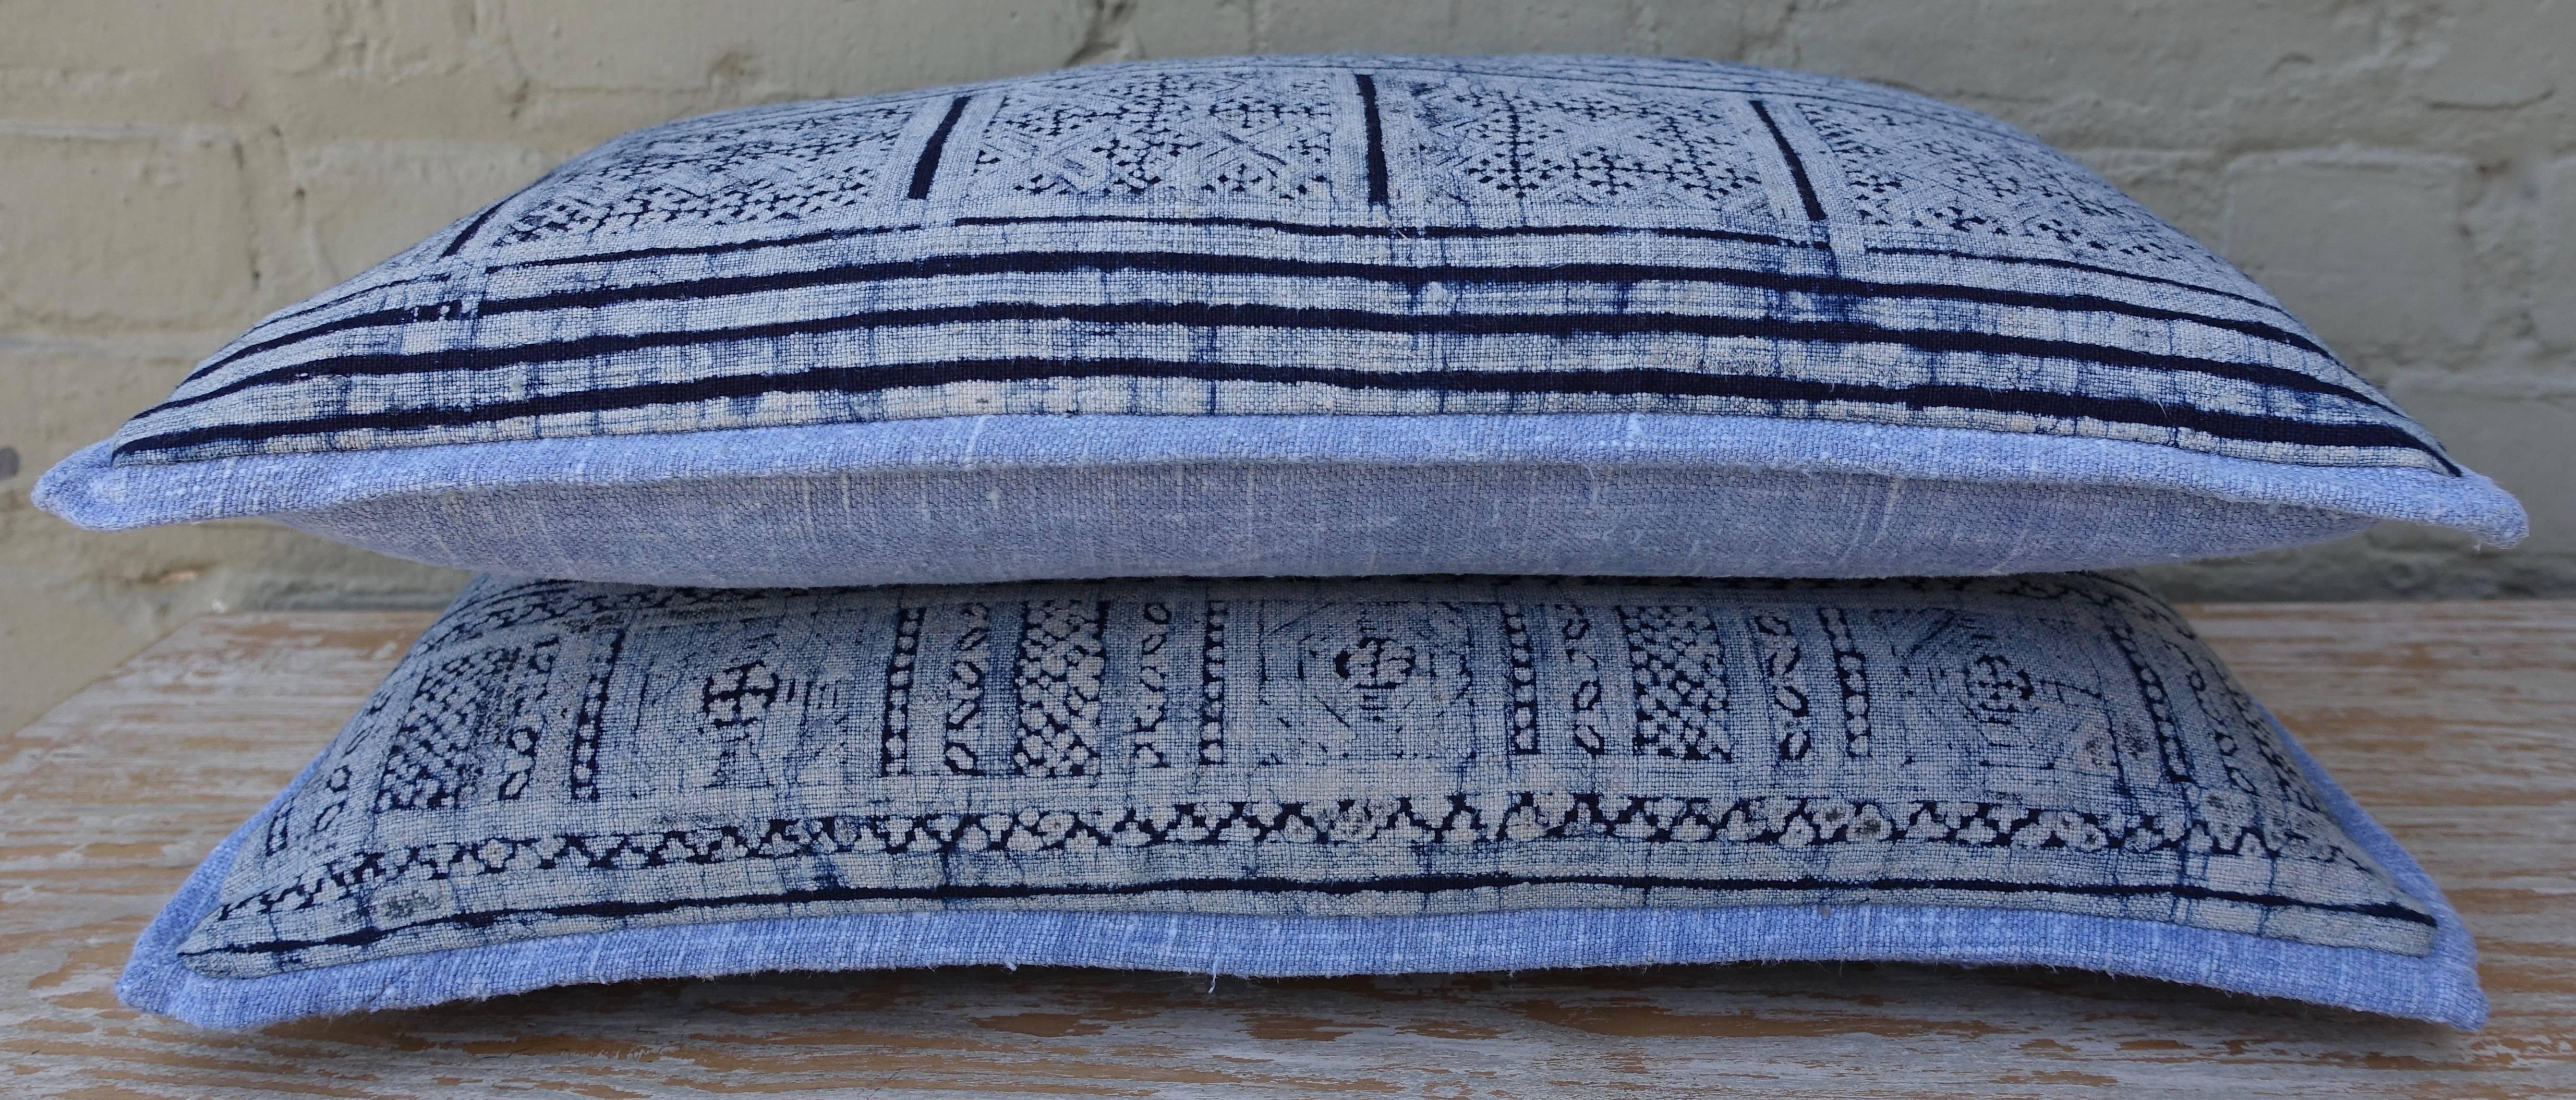 Cotton Navy and Light Blue Patterned Batik Pillows, Pair